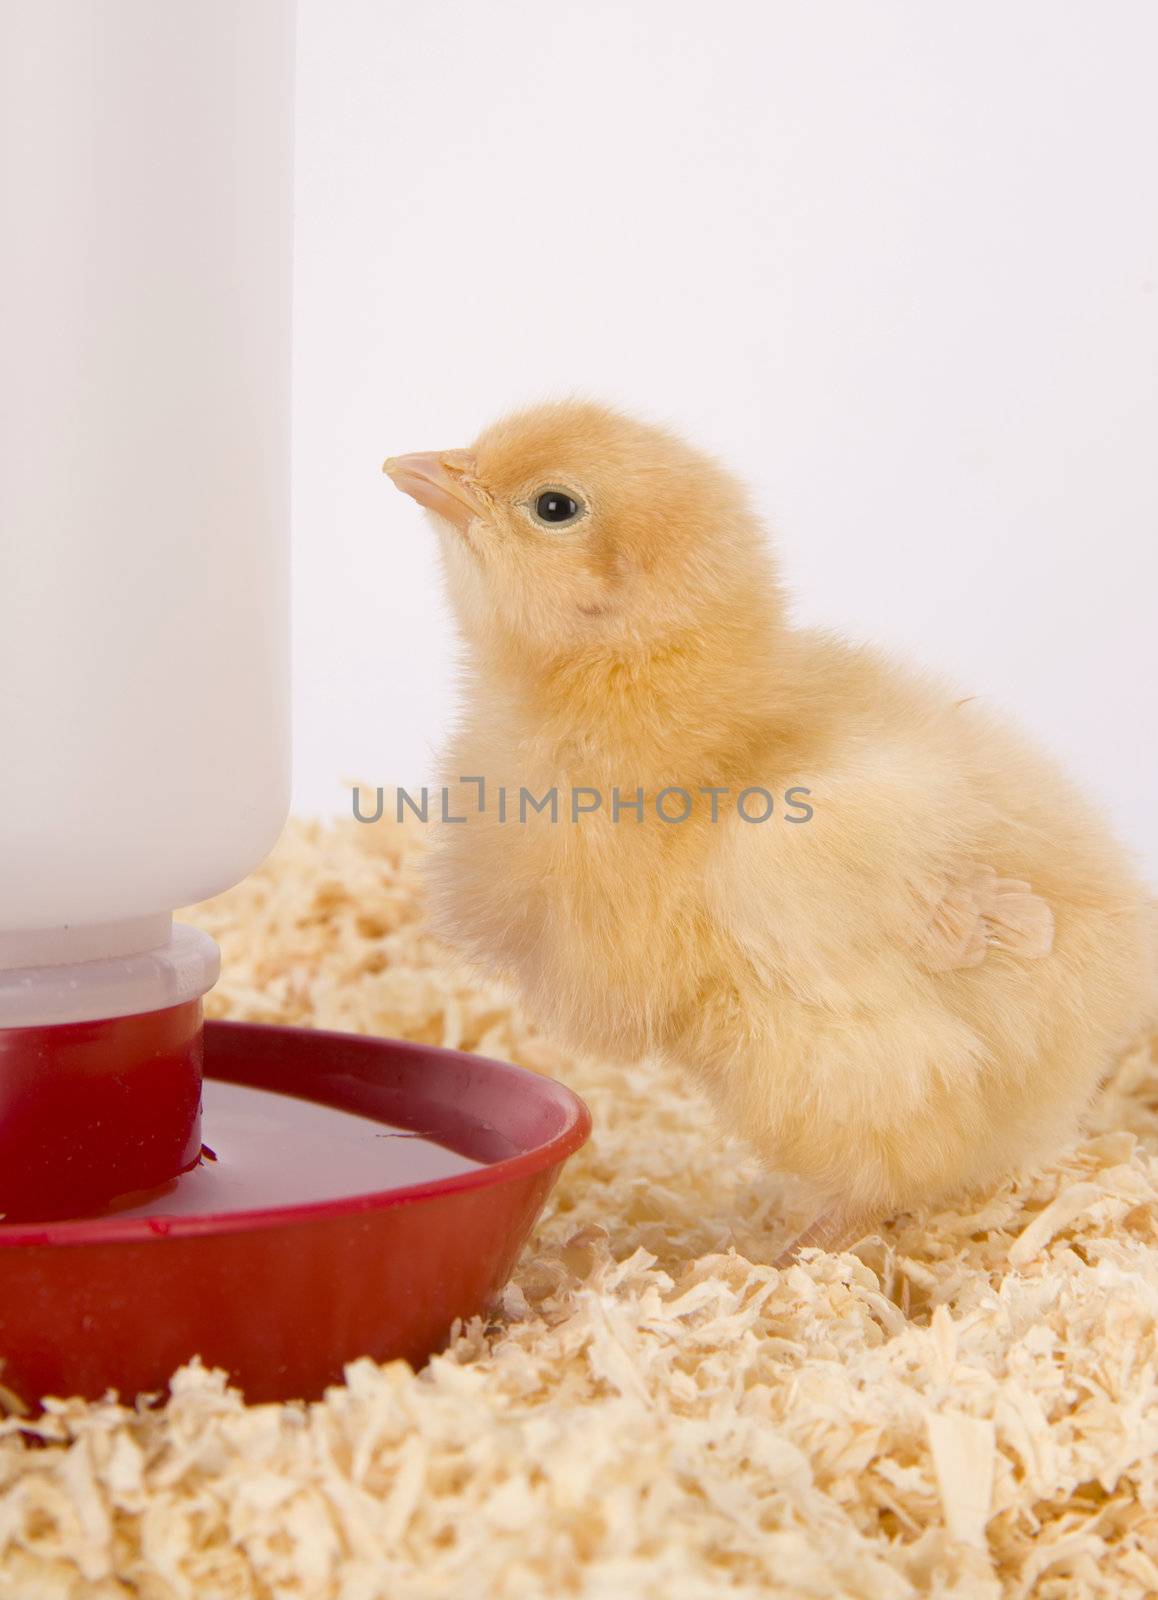 One Newborn Chicken stands by the water supply